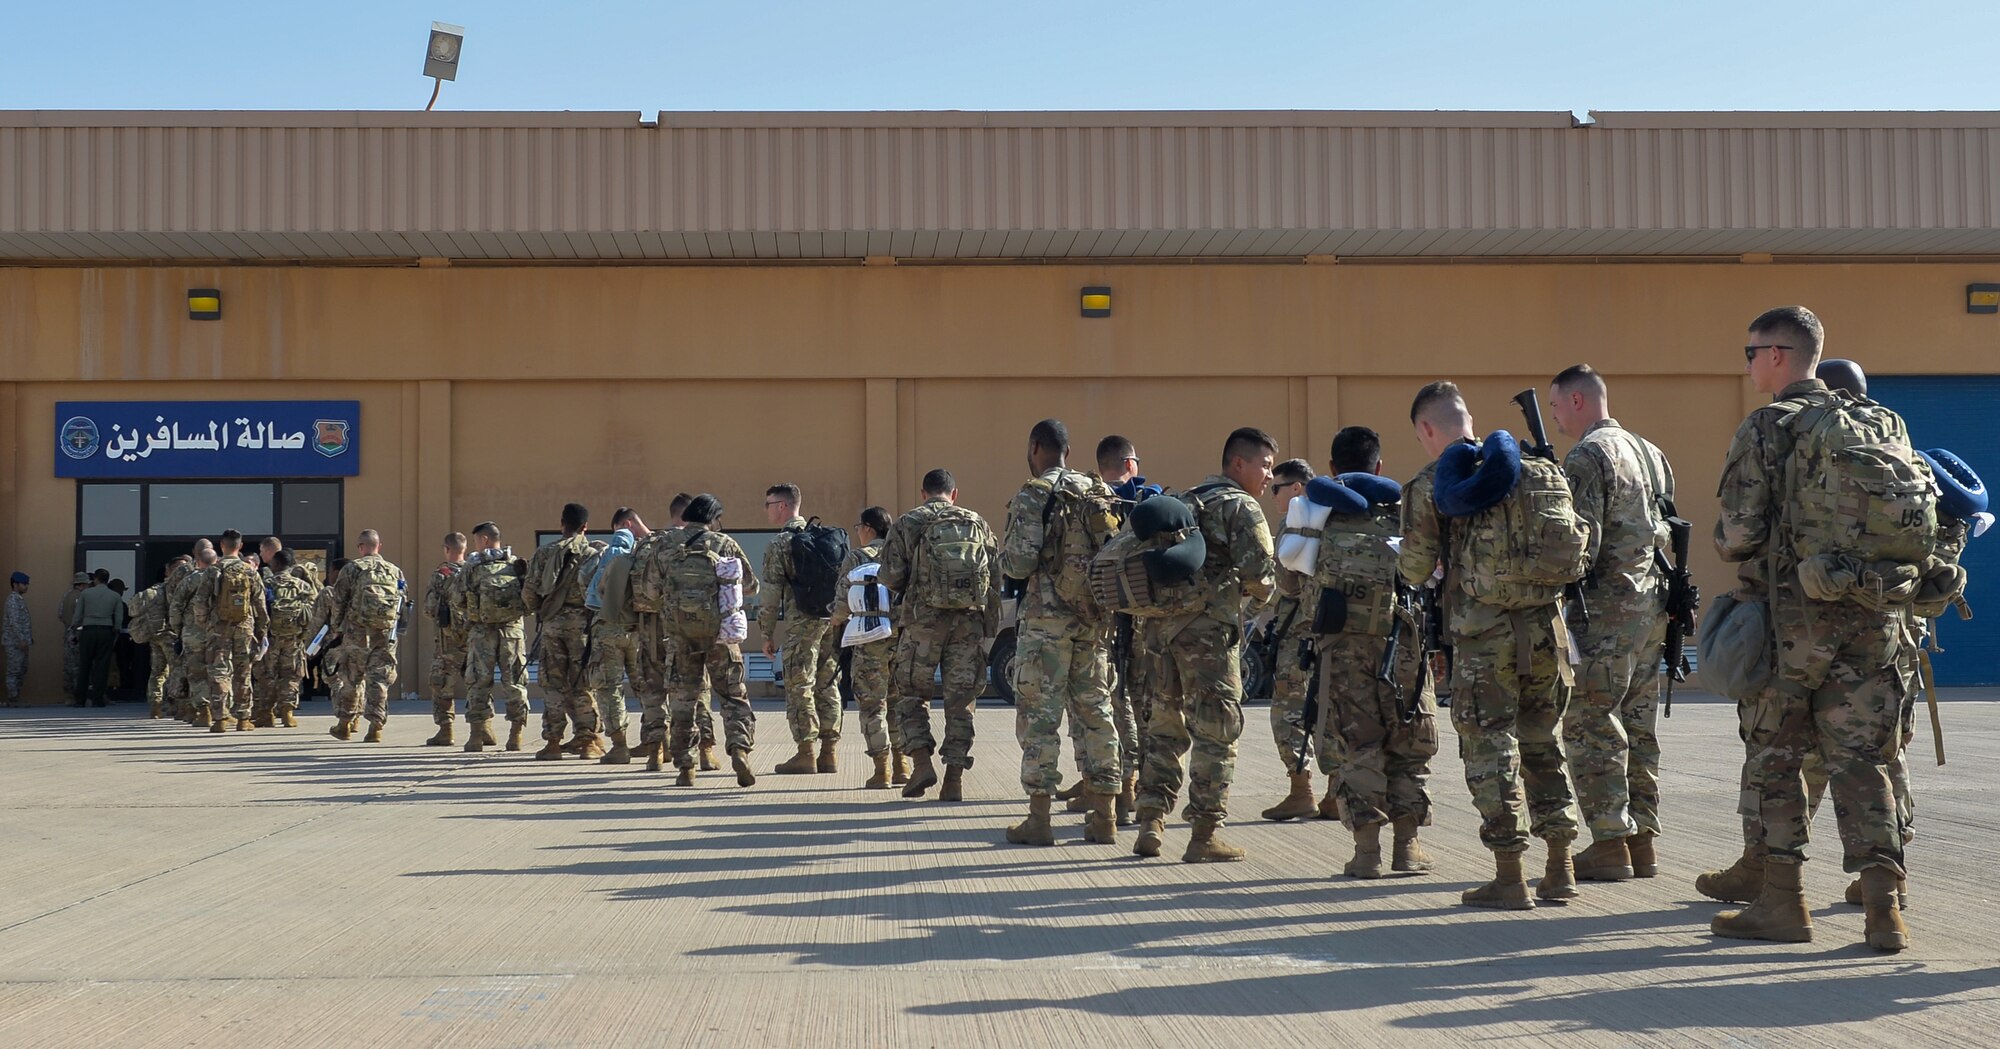 U.S. Army Soldiers with 4-5 Air Defense Artillery Battalion, Ft. Hood, Texas, arrive at Prince Sultan Air Base (PSAB), Kingdom of Saudi Arabia KSA), October 21, 2019.